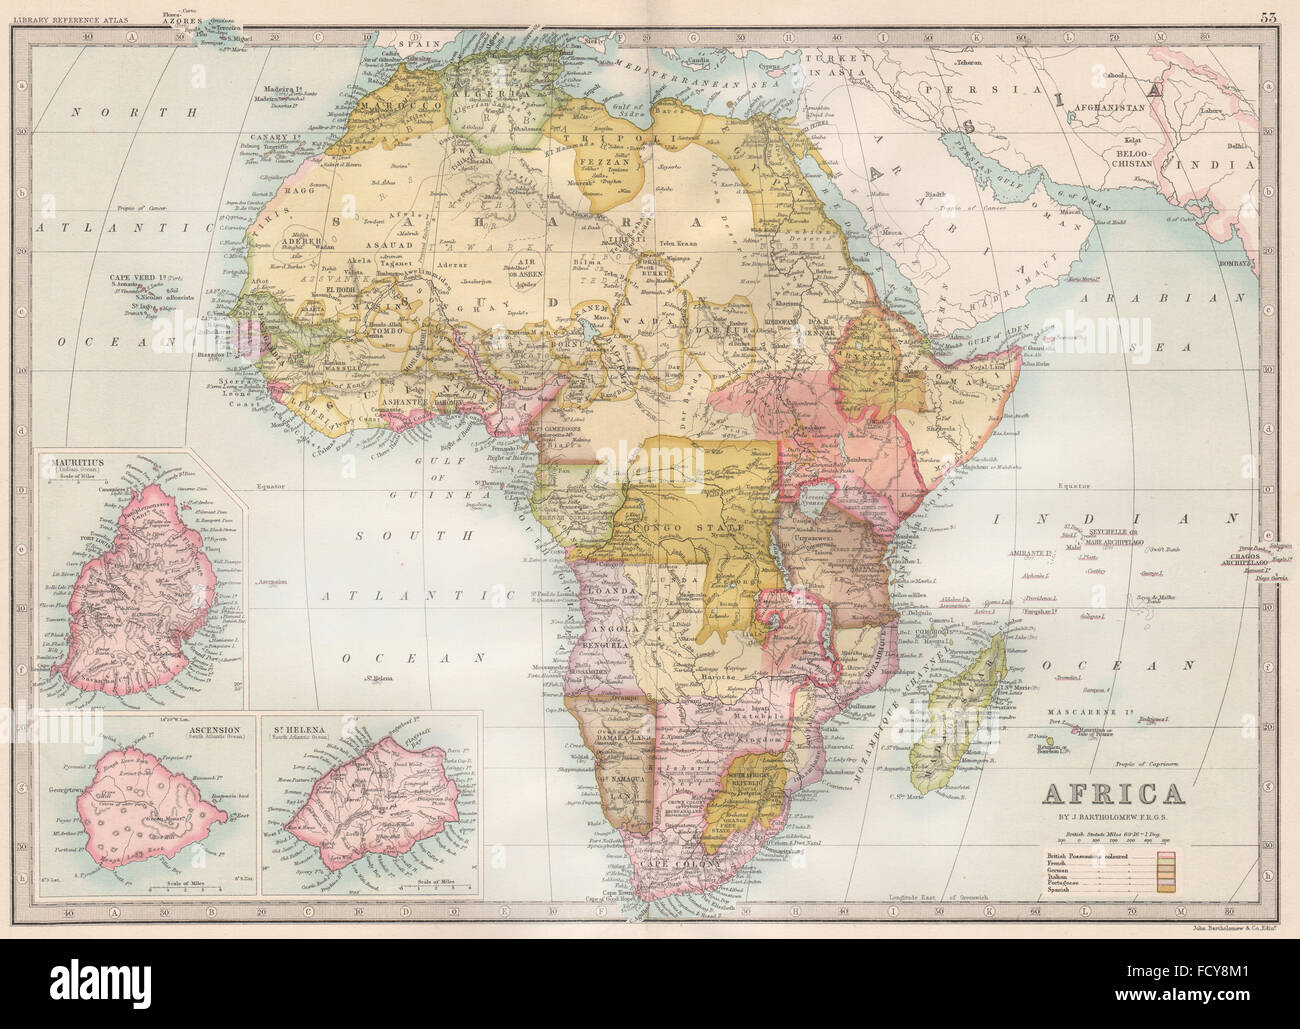 África:muchas fronteras pendientes.S Kenya=British East Africa Co territorio mapa de 1890 Foto de stock